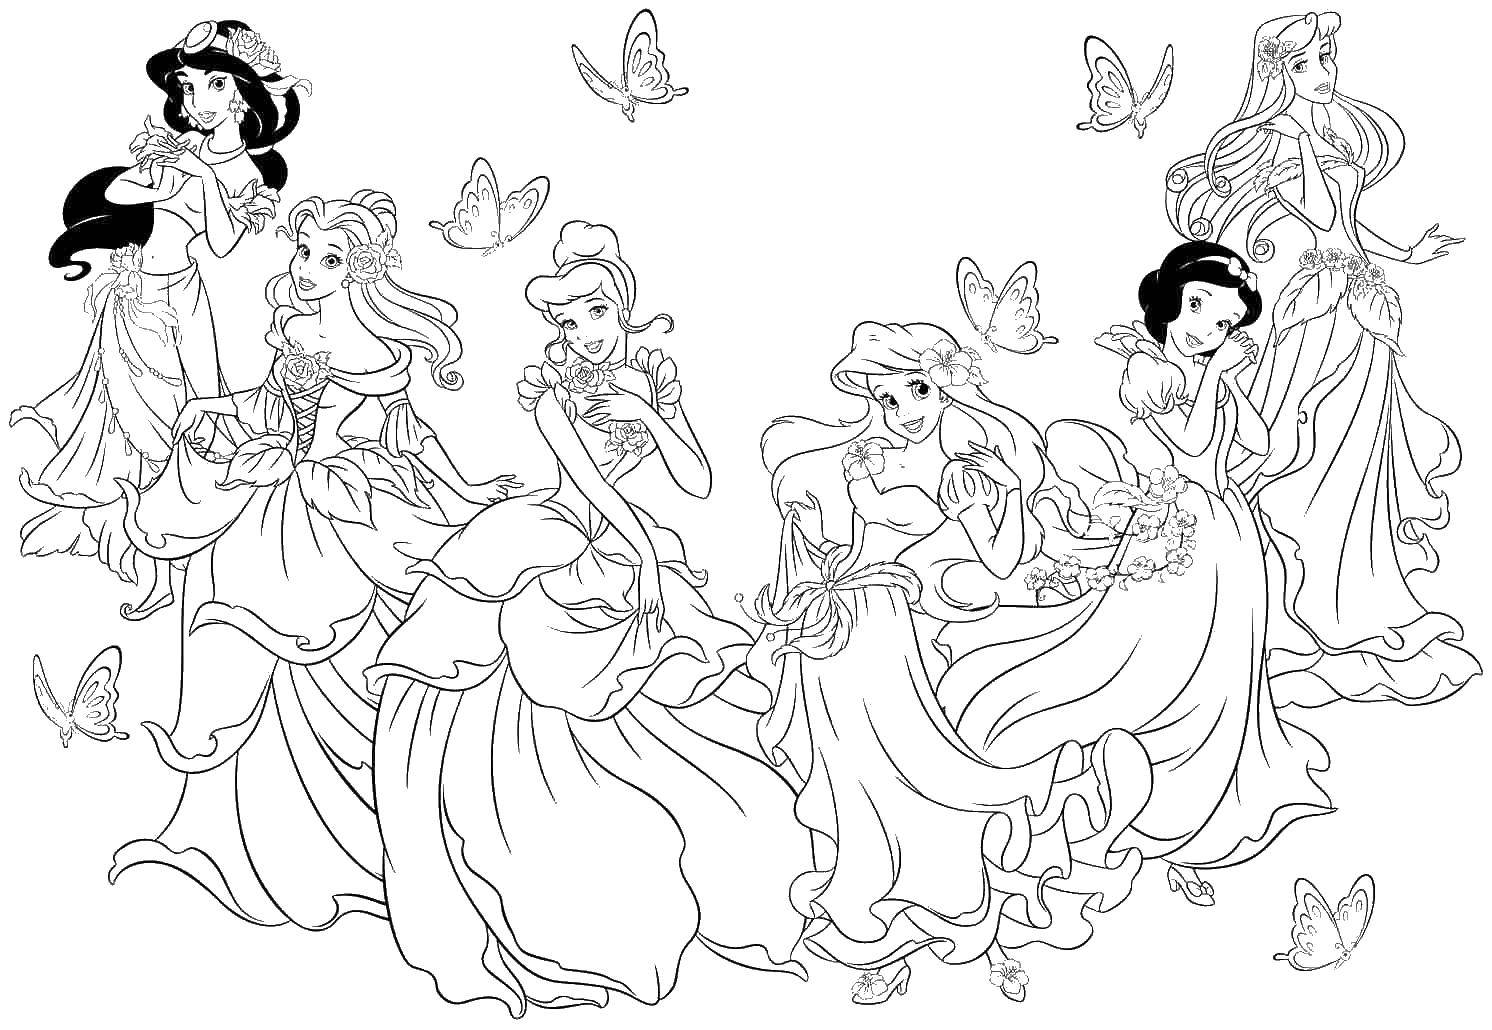 Coloring Disney Princess. Category Princess. Tags:  Princess, Disney Princess.